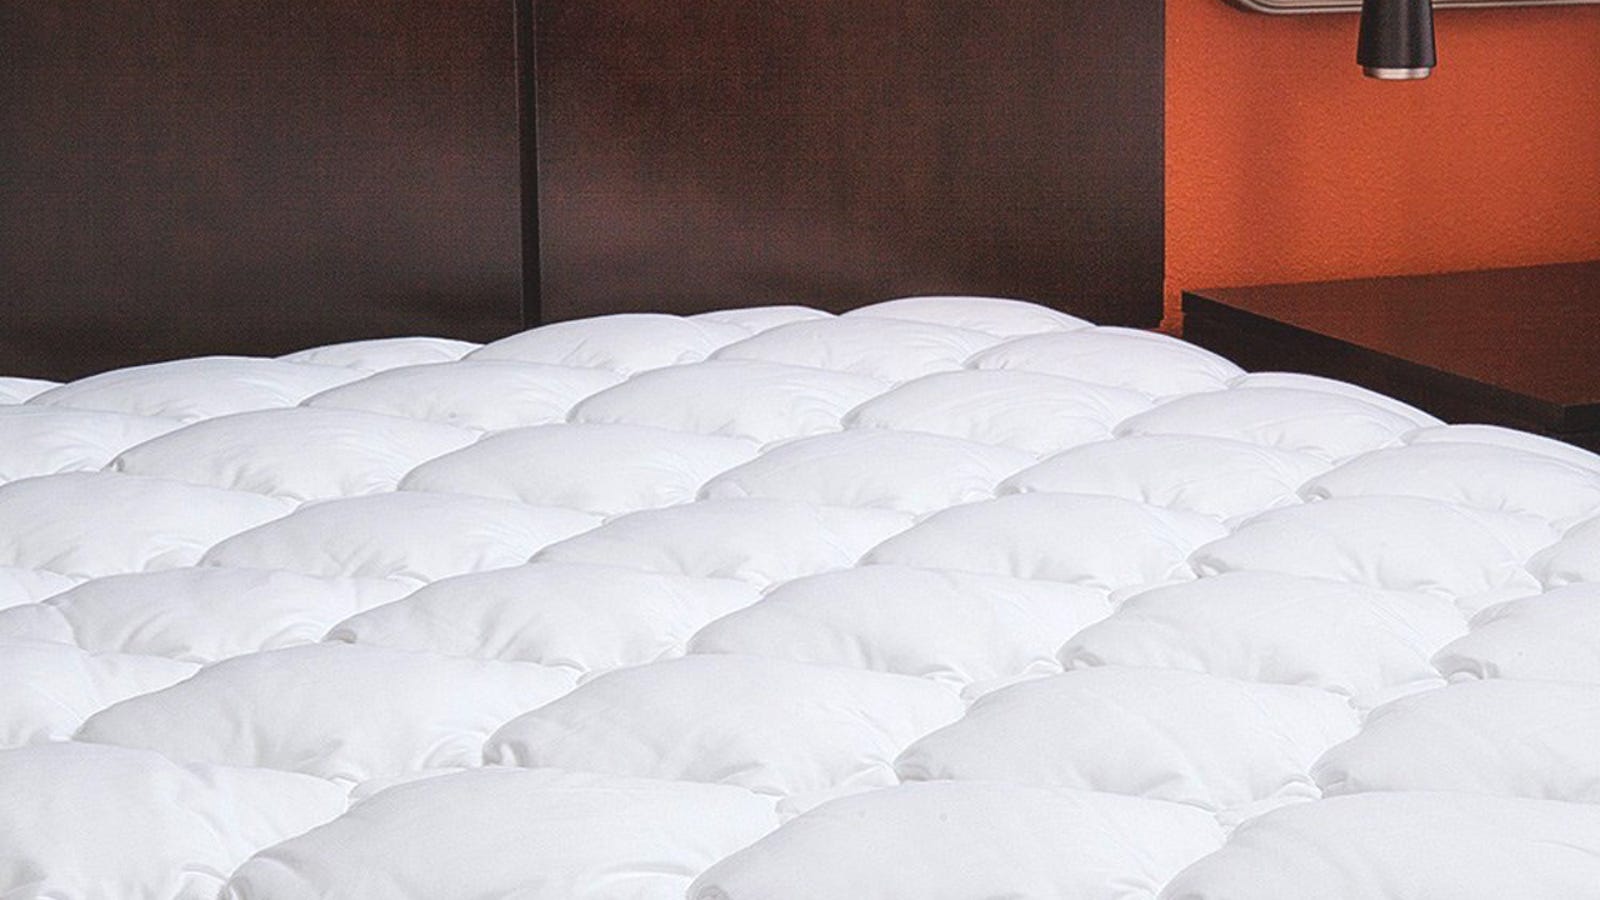 marriott bed mattress pad